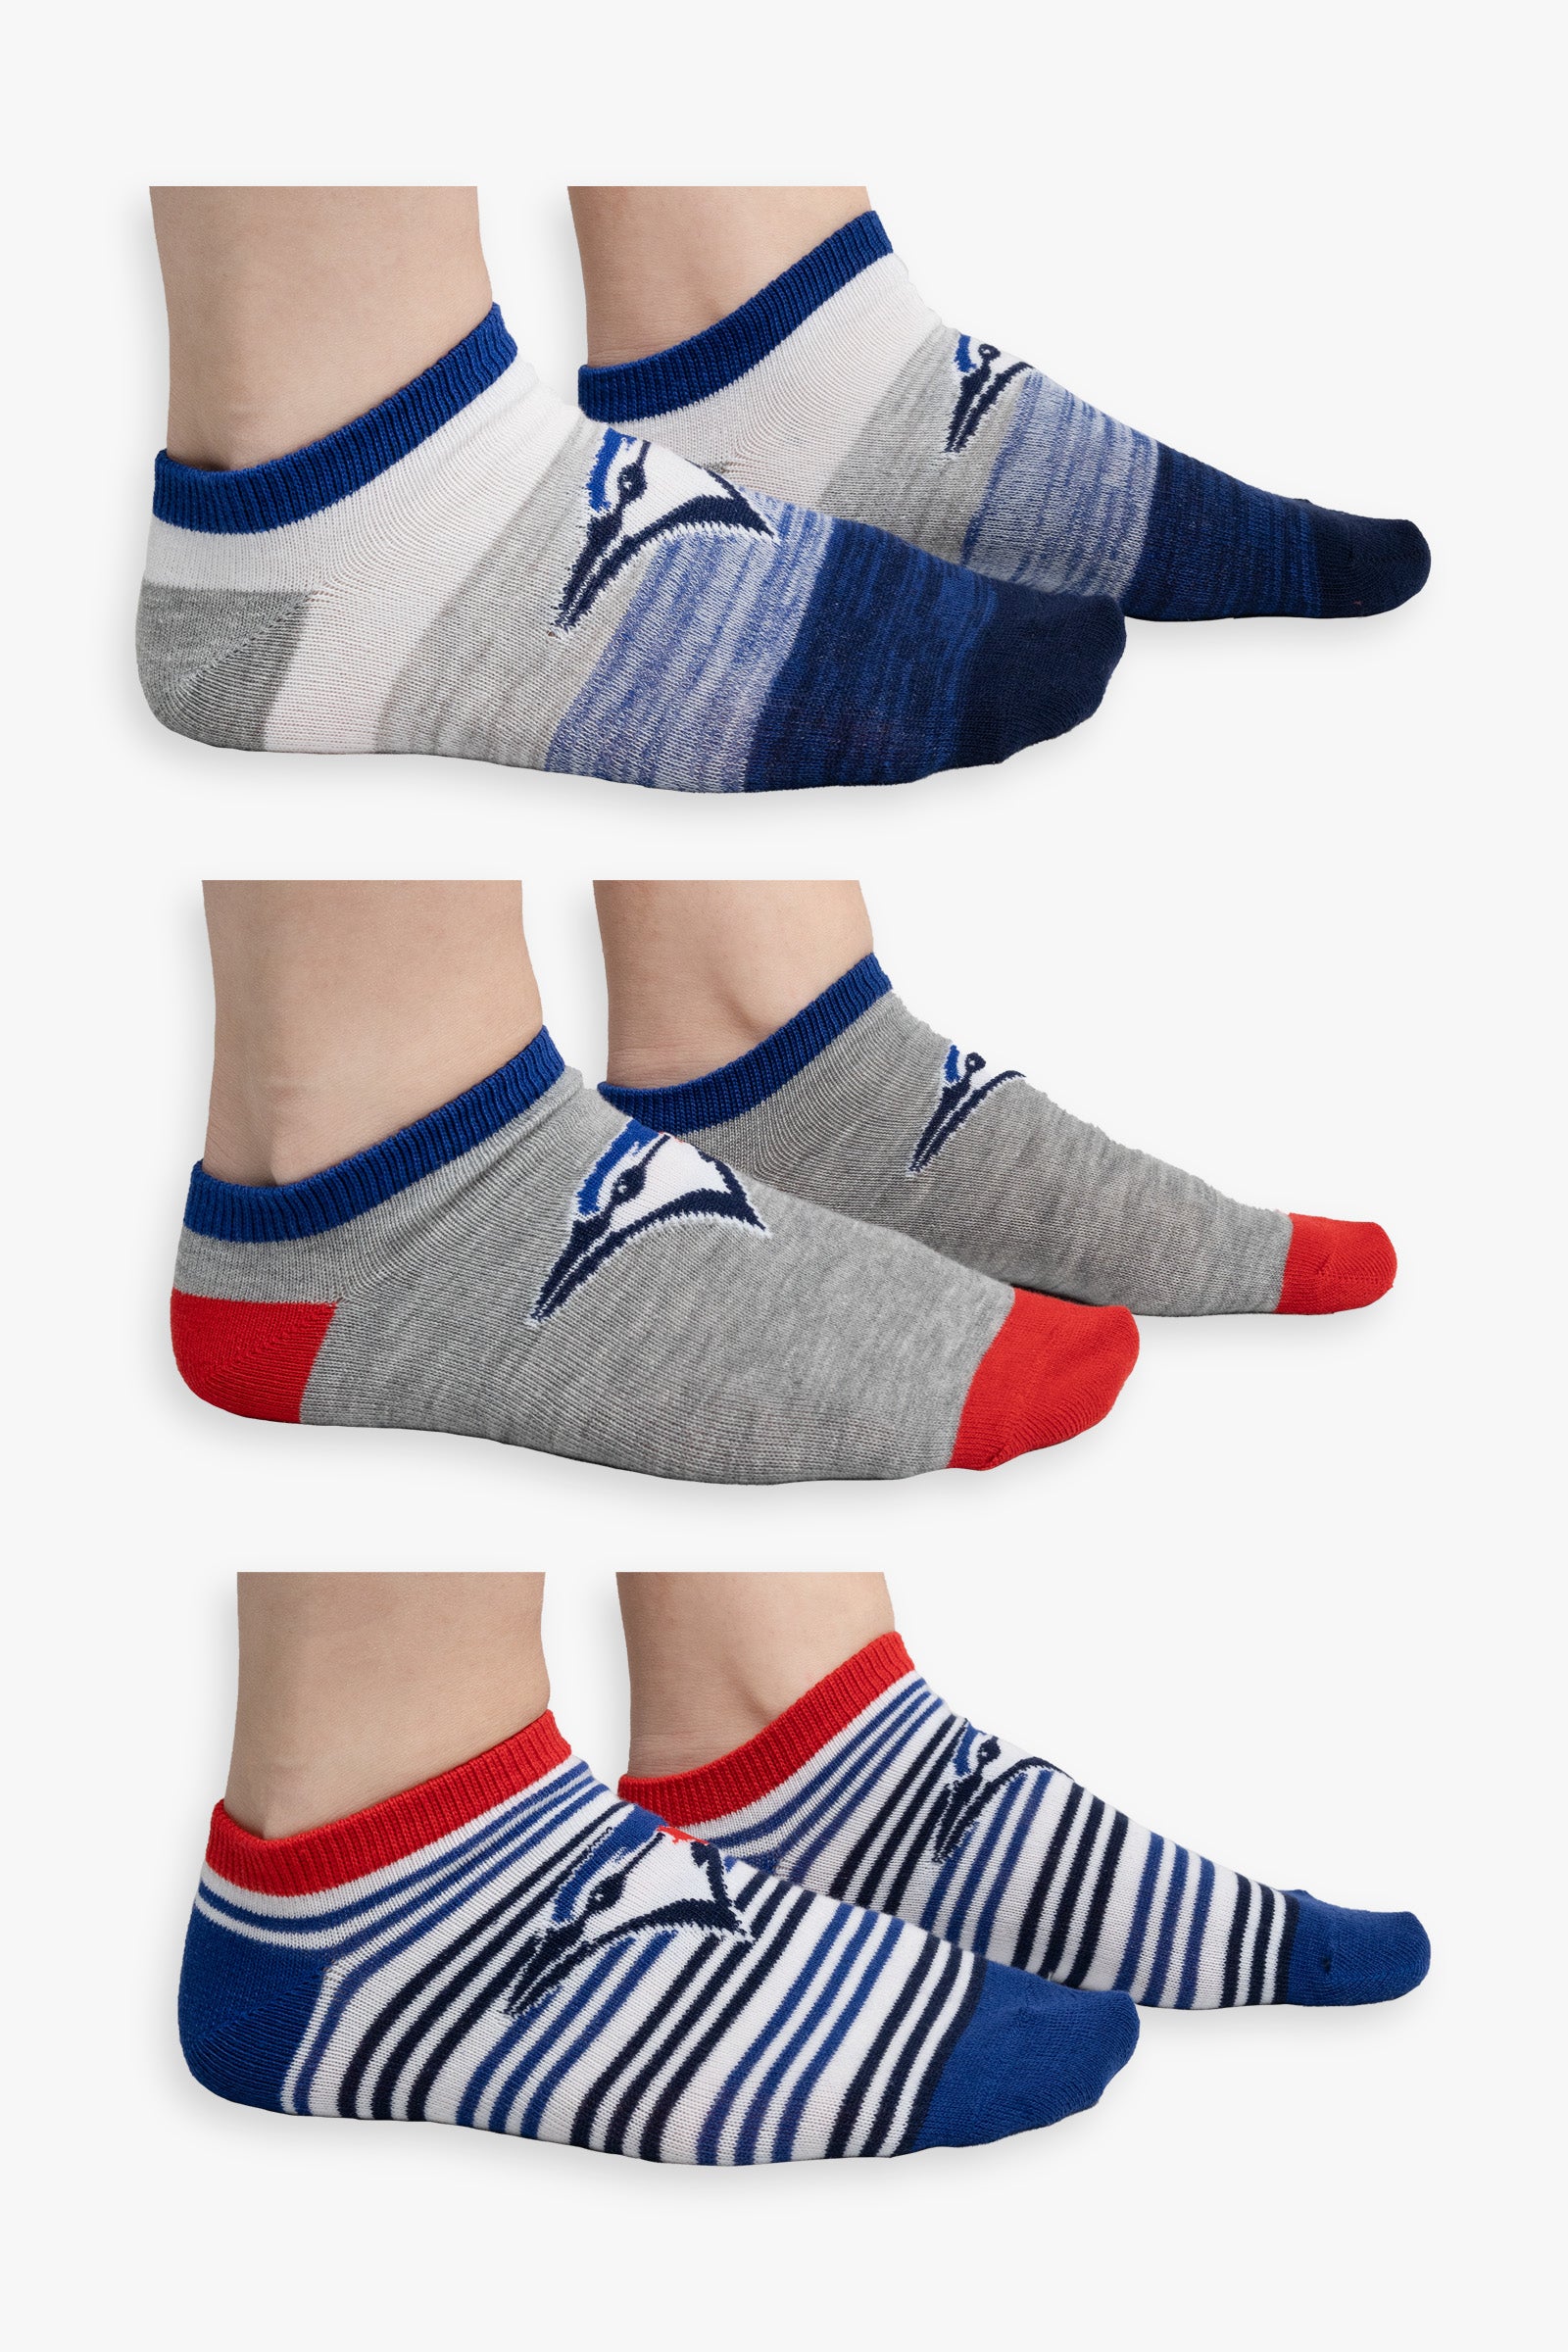 Gertex Ladies 3-Pack MLB Toronto Blue Jays Ankle Socks, Shoe Size 5-12